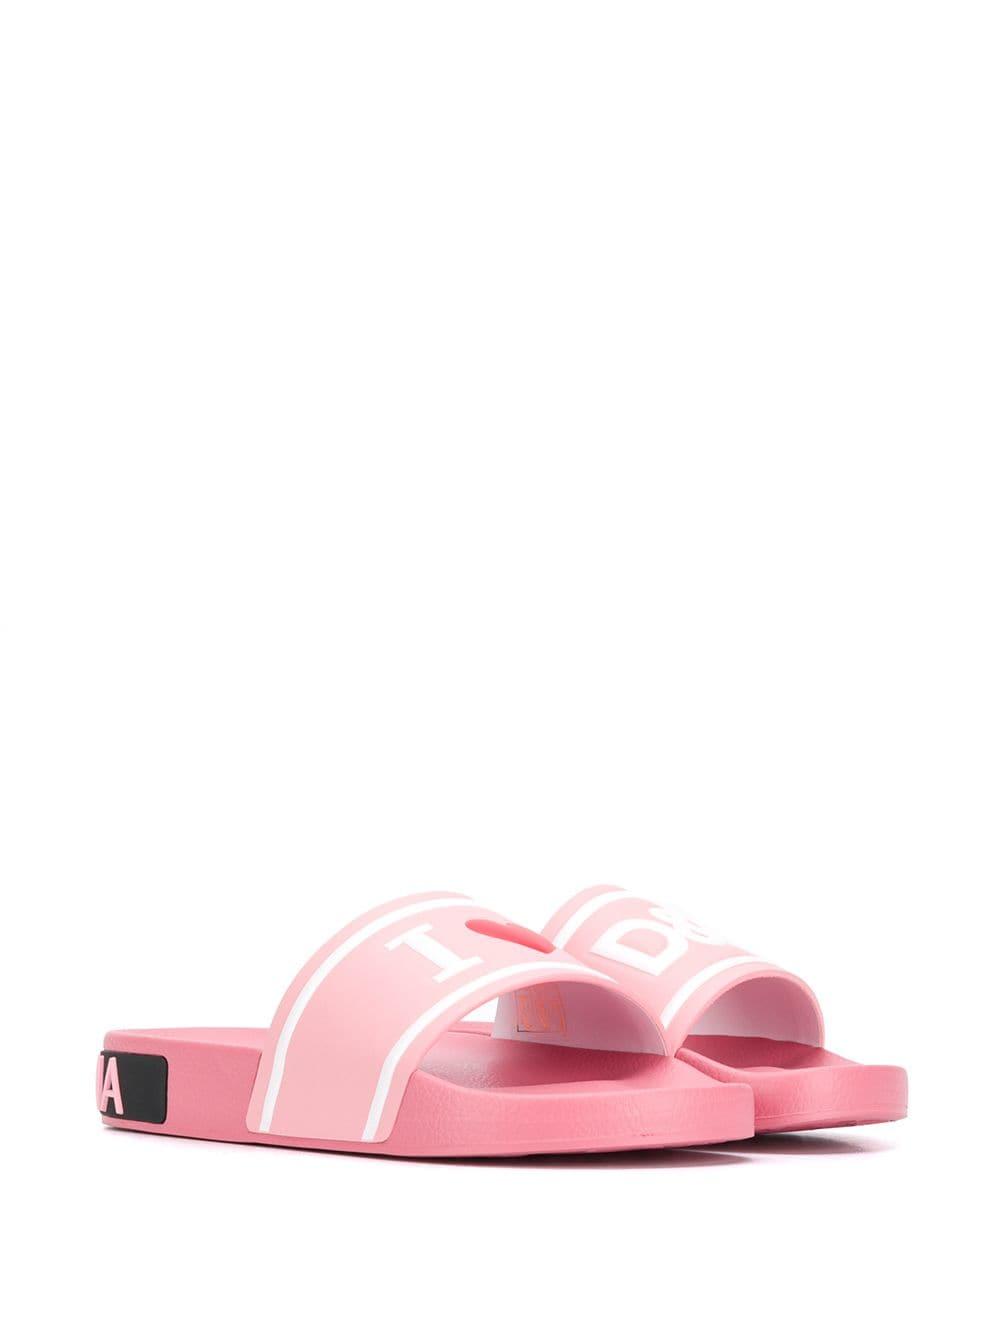 Verandering vergeven compleet Dolce & Gabbana I Love D&g Slide Sandals in Pink | Lyst